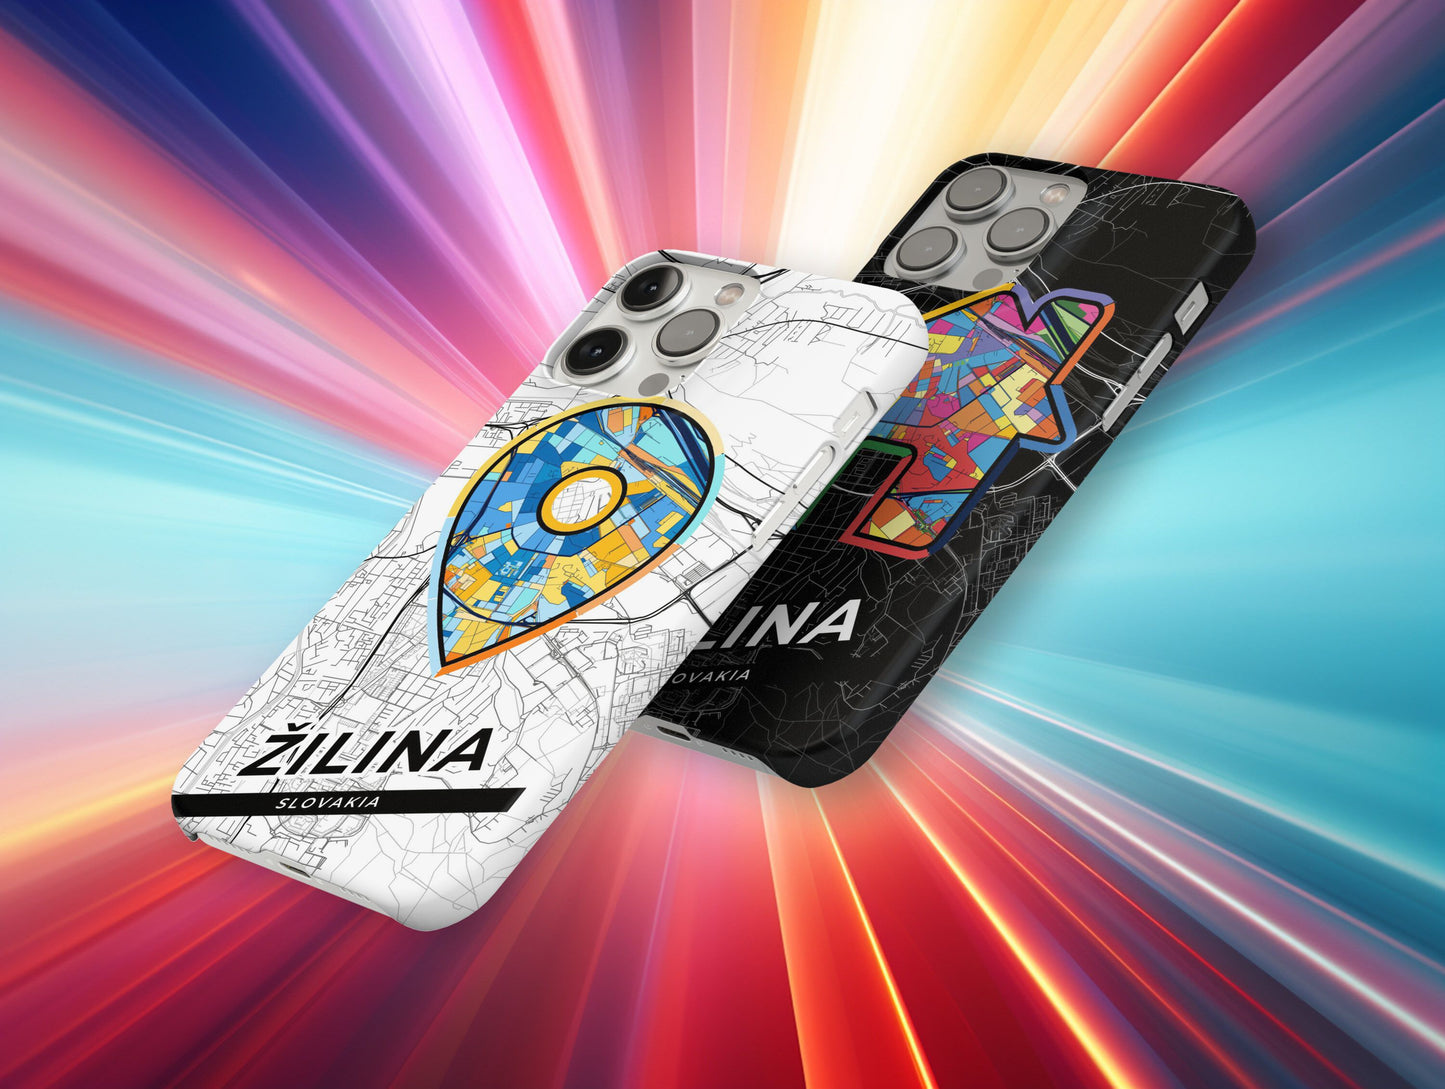 Žilina Slovakia slim phone case with colorful icon